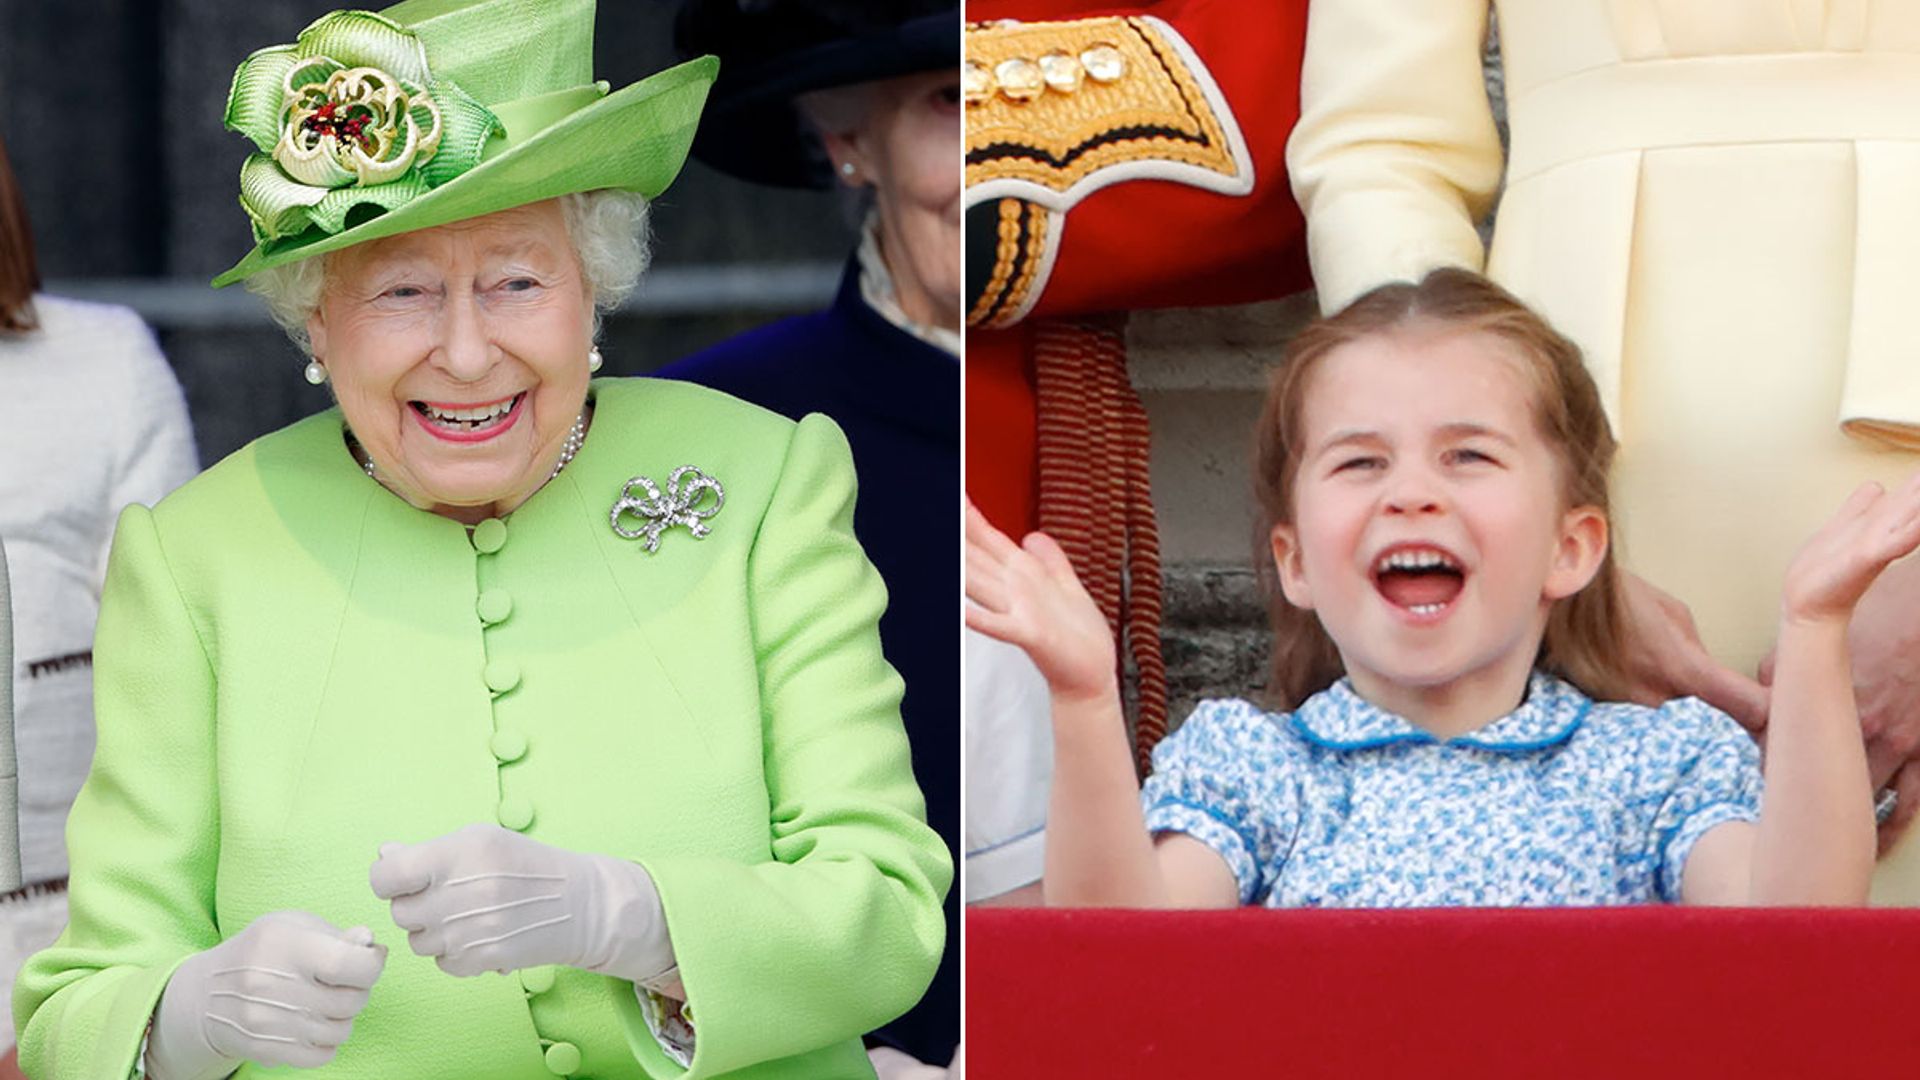 The Queen's fussy eating habit her great-grandchildren would approve of